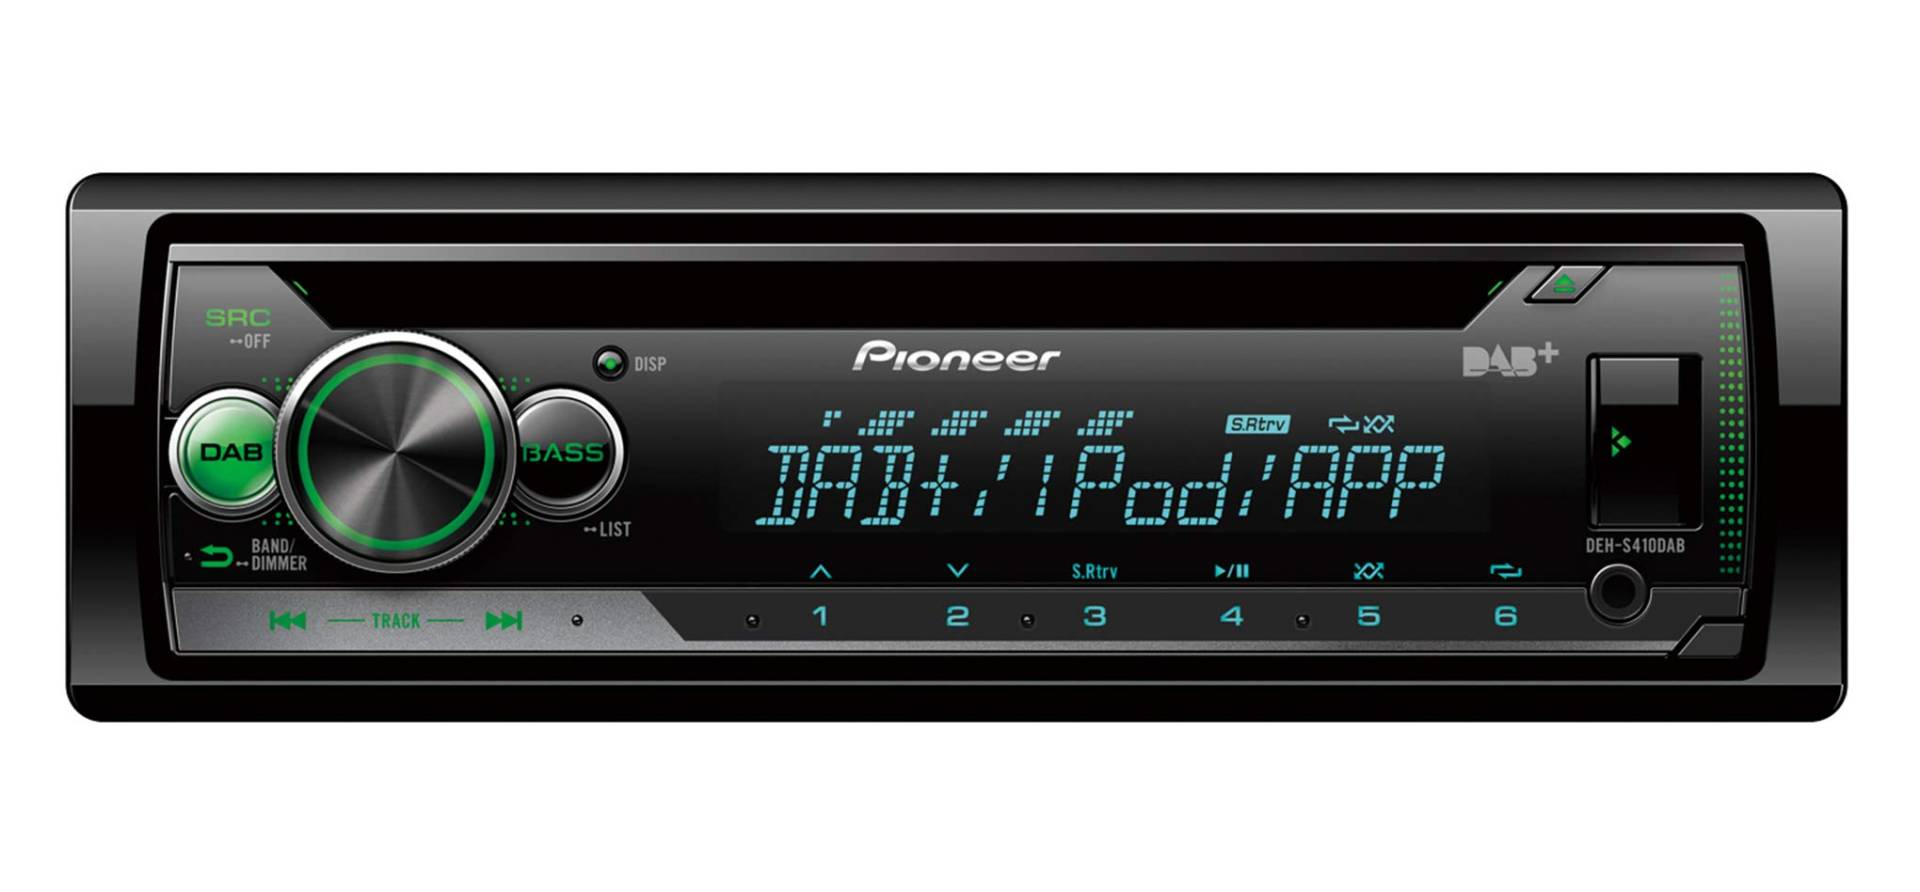 Pioneer DEH-S410DAB-AN, 1-DIN-Autoradio, CD-Tuner mit FM und DAB+, MP3, USB und AUX-Eingang, RGB – Beleuchtung, Smart Sync App, 5-Band Equalizer, Spotify, inklusive DAB- Antenne von Pioneer